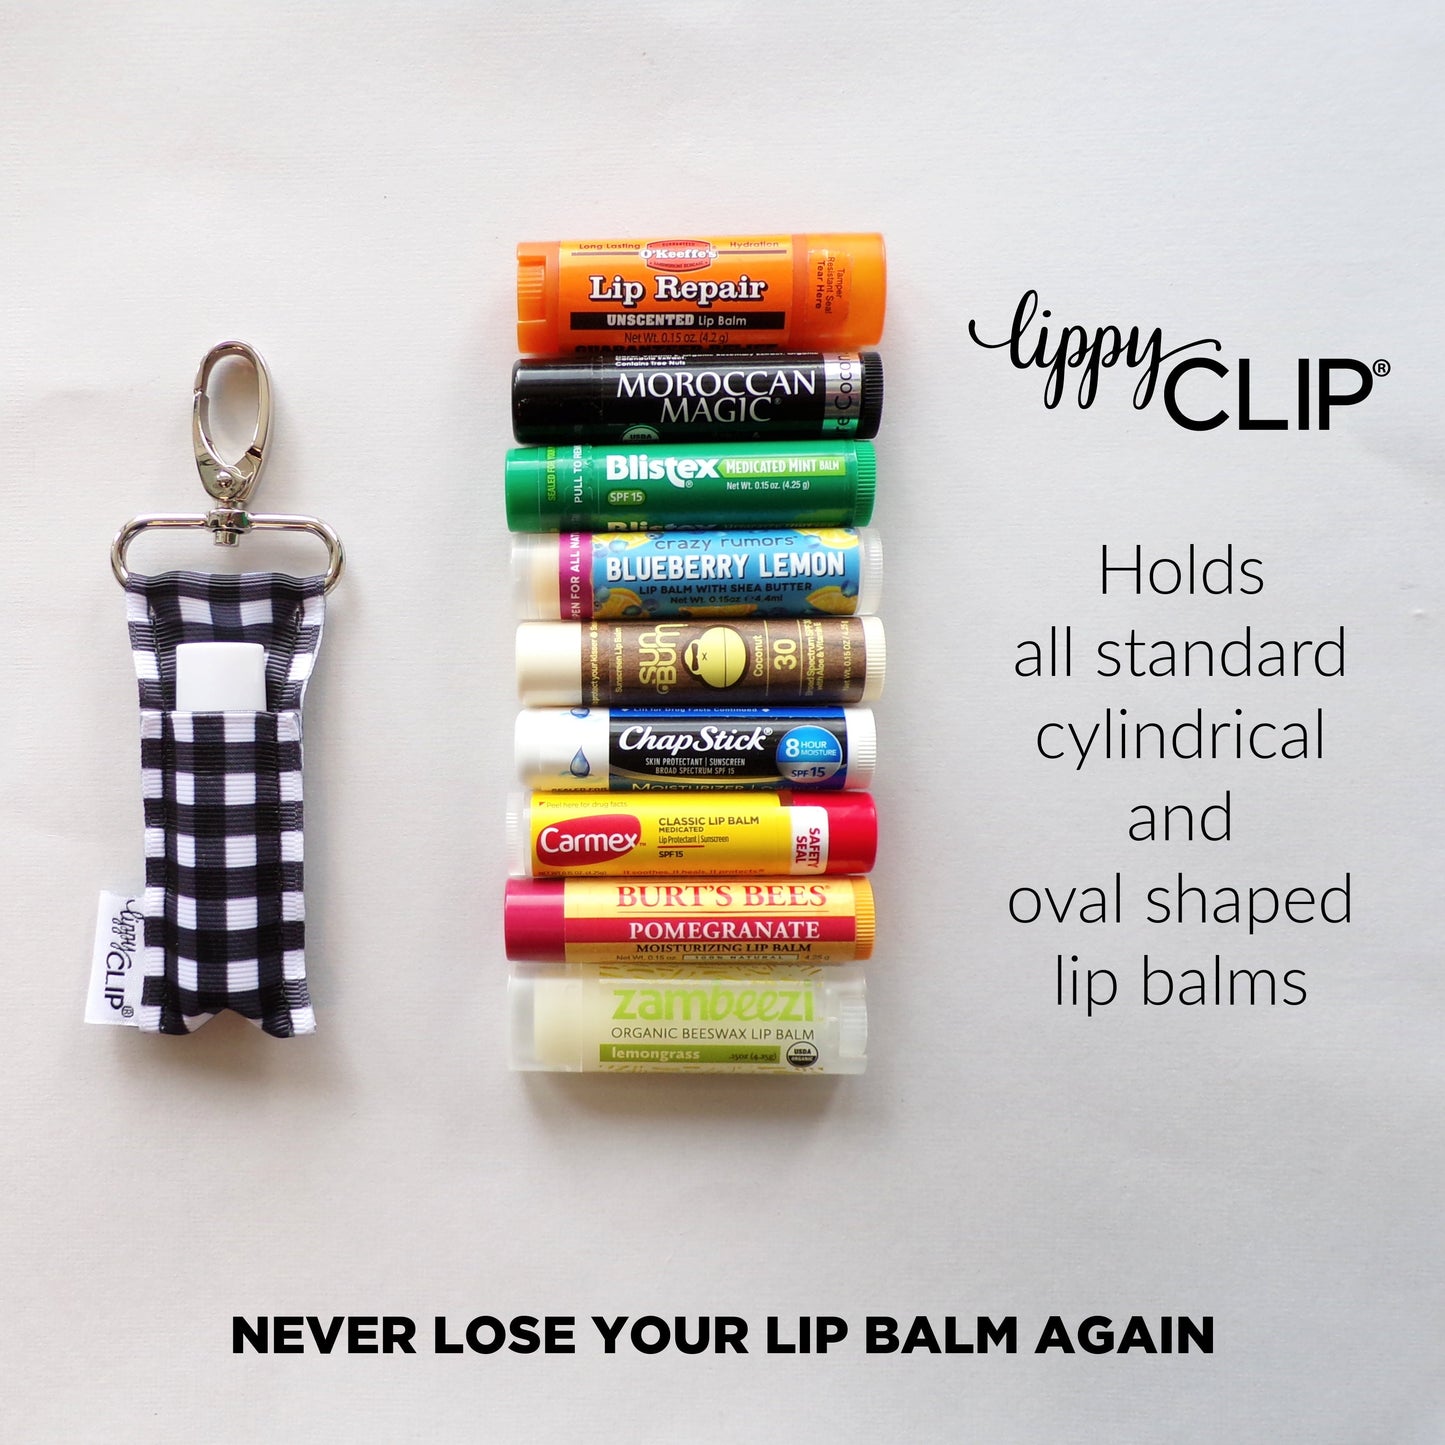 Whales LippyClip® Lip Balm Holder